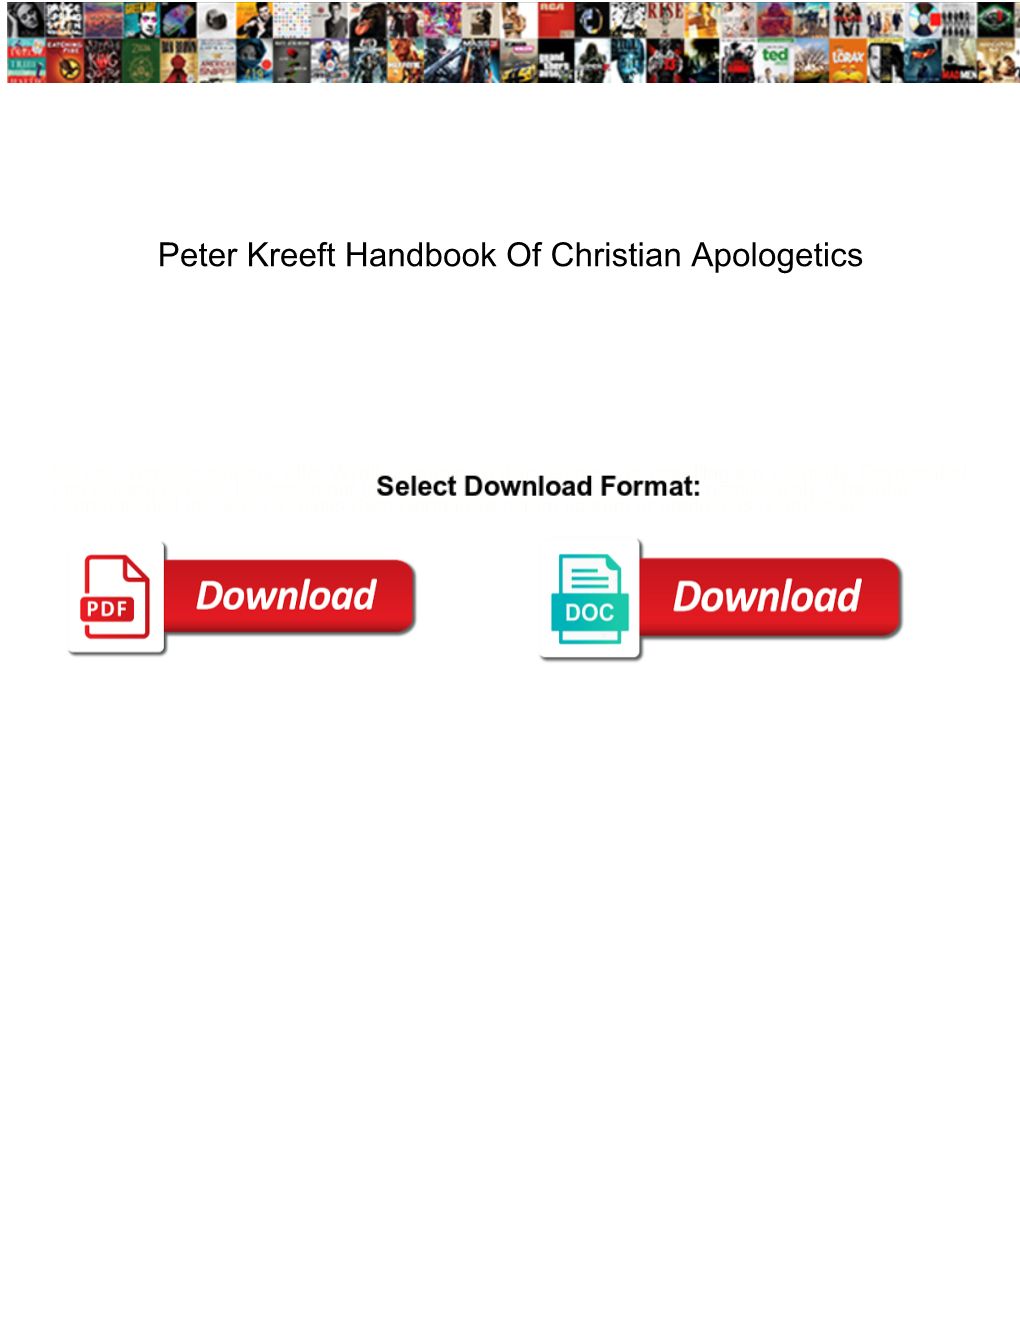 Peter Kreeft Handbook of Christian Apologetics